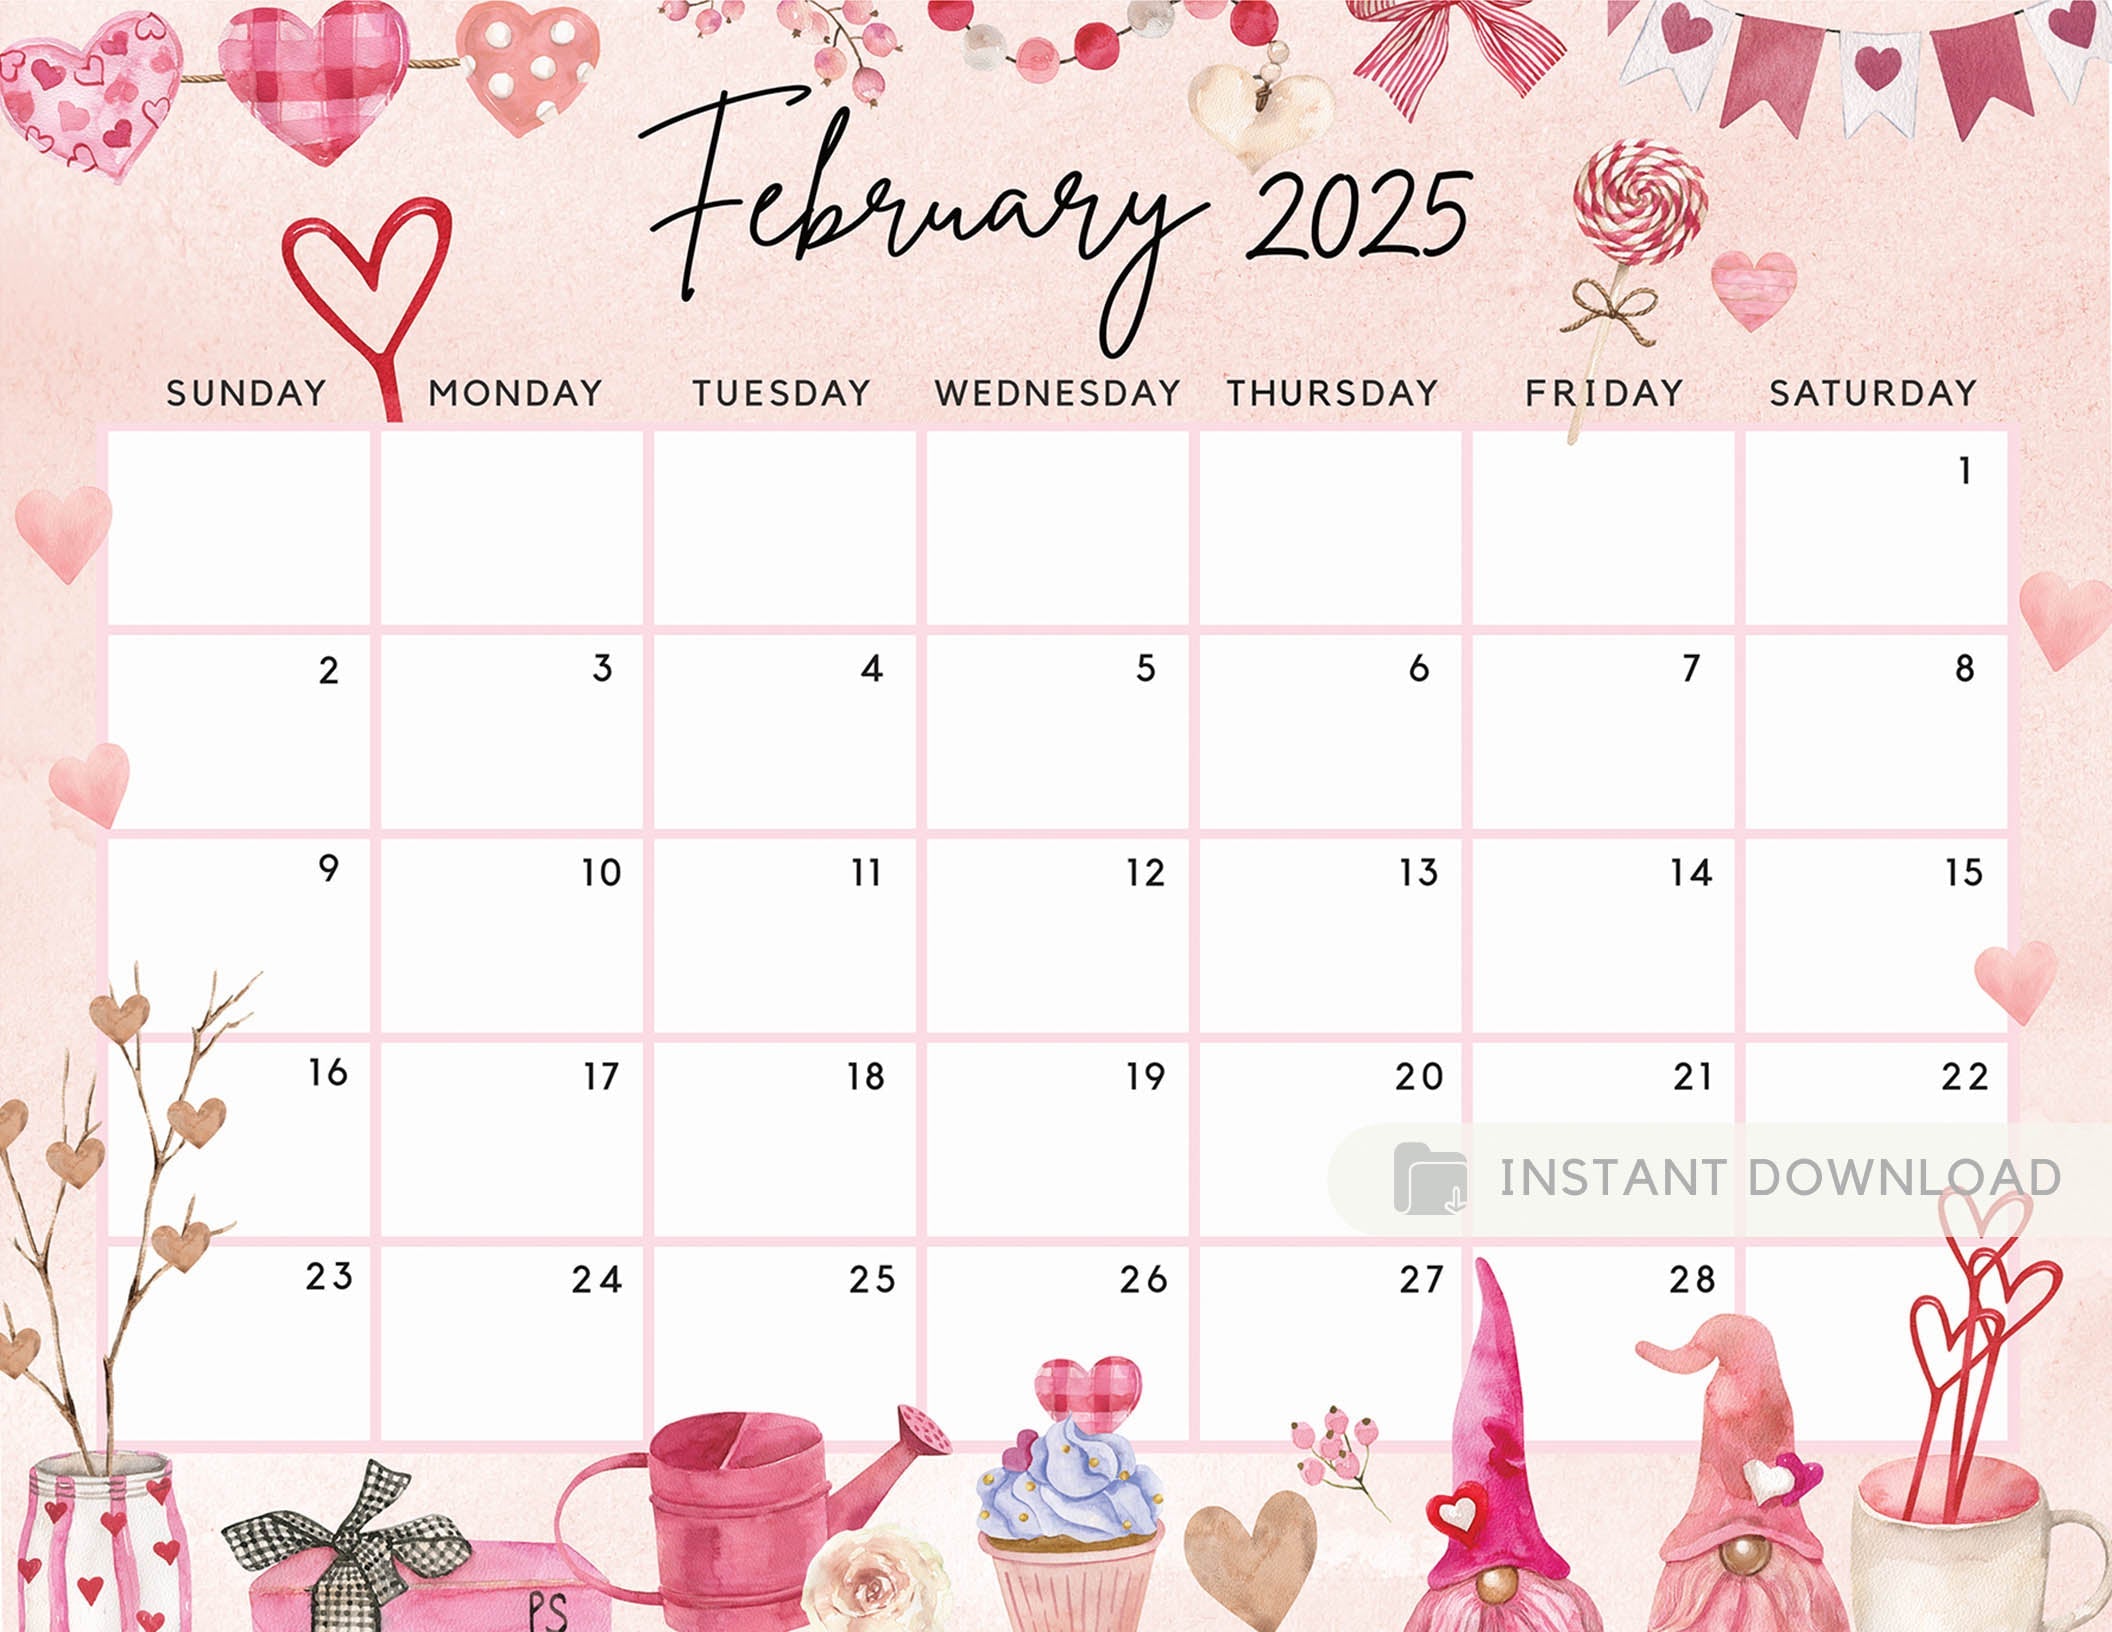 February 2025 Calendar, Lovely & Sweet Valentine's Day Gnome Cut